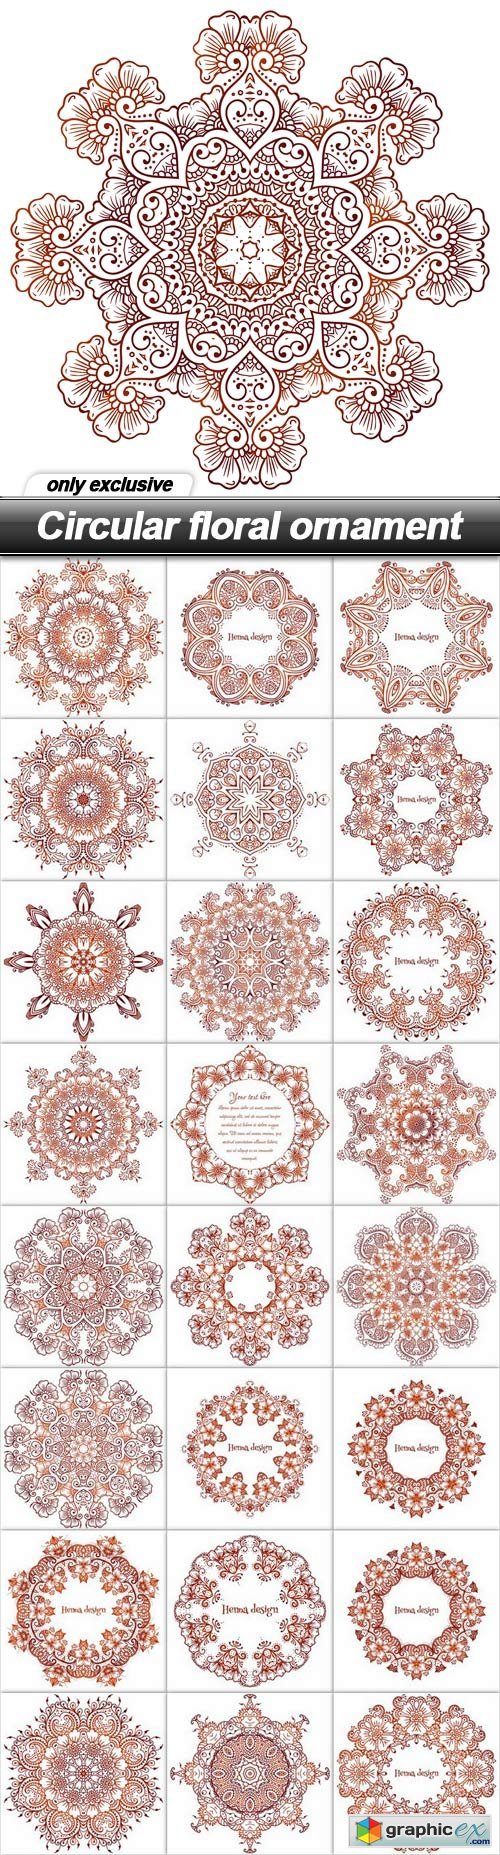 Circular floral ornament - 25 EPS